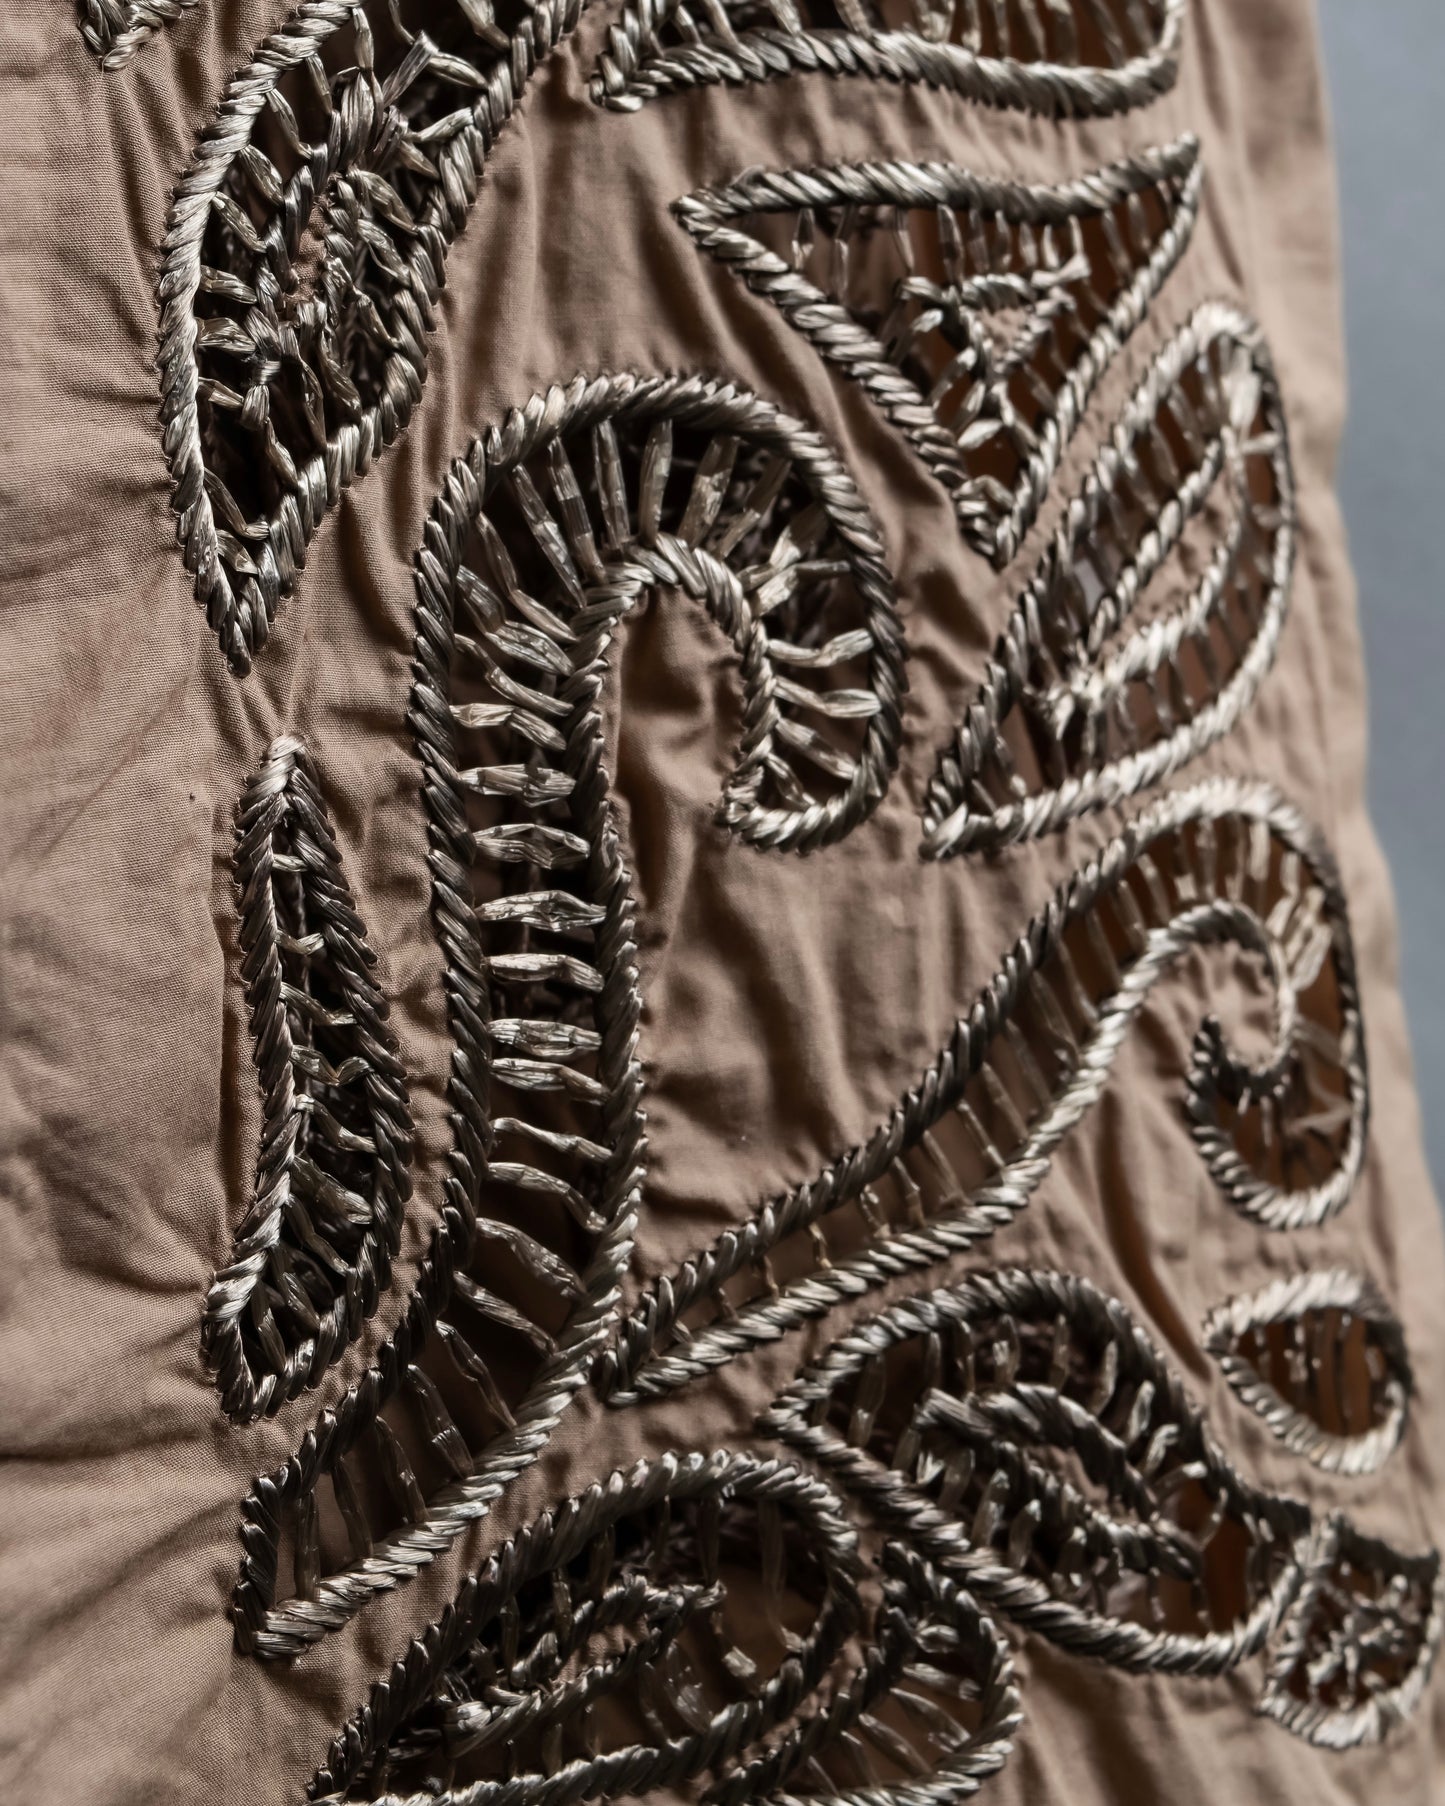 "MAURIZIO PECORARO" Punched ethnic pattern long dress